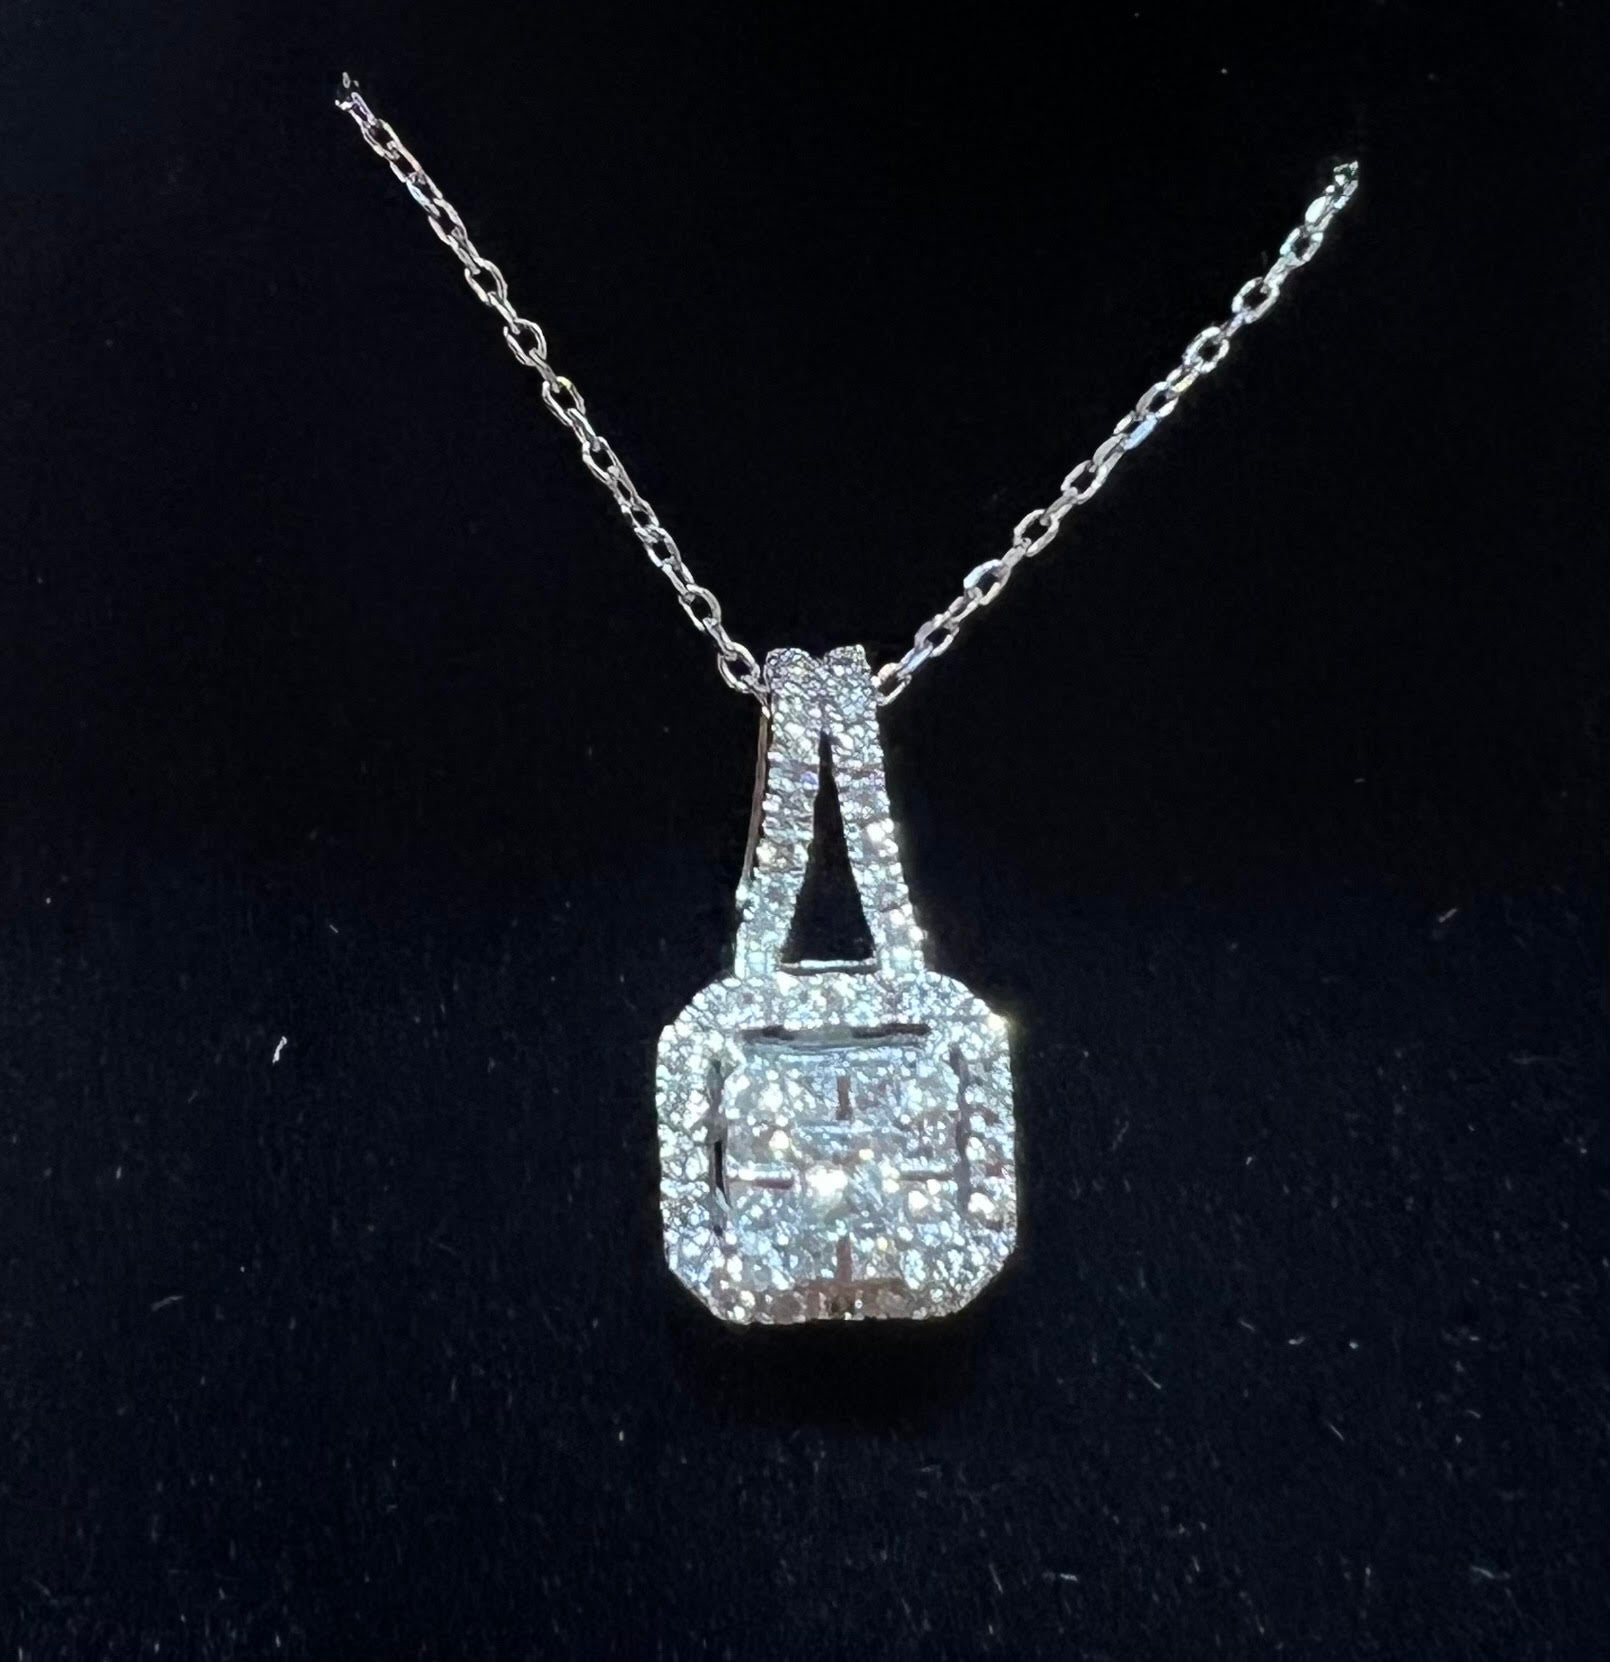 10kt White Gold 0.50cttw Ladies diamond necklace